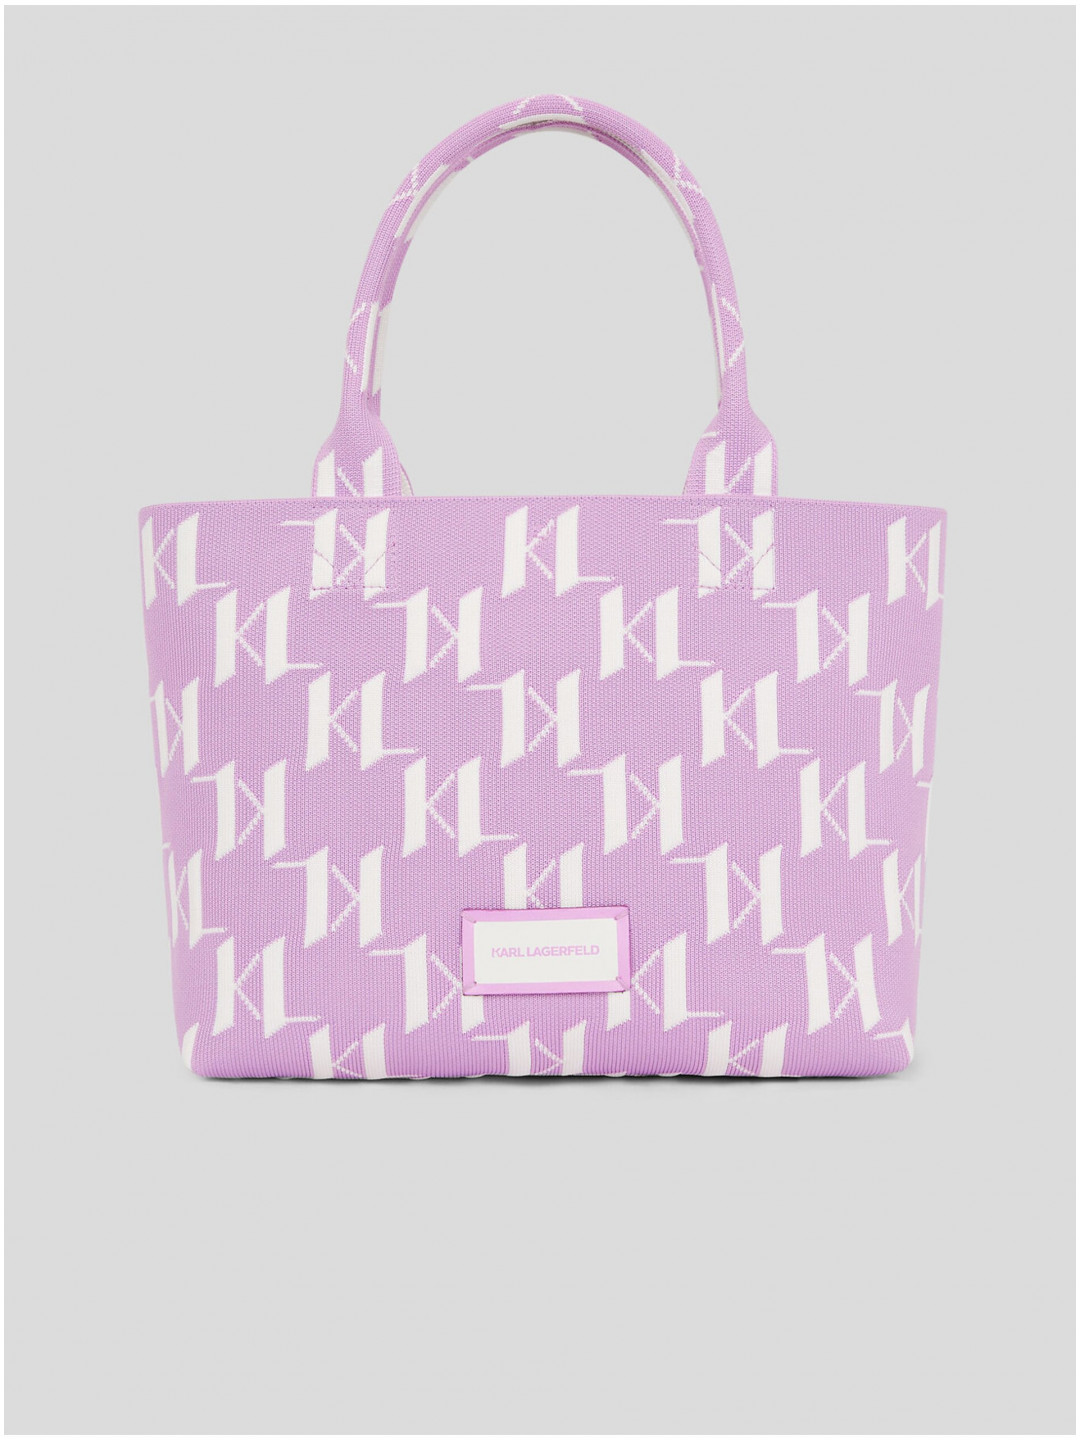 Bílo-fialová dámská vzorovaná kabelka KARL LAGERFELD Monogram Knit